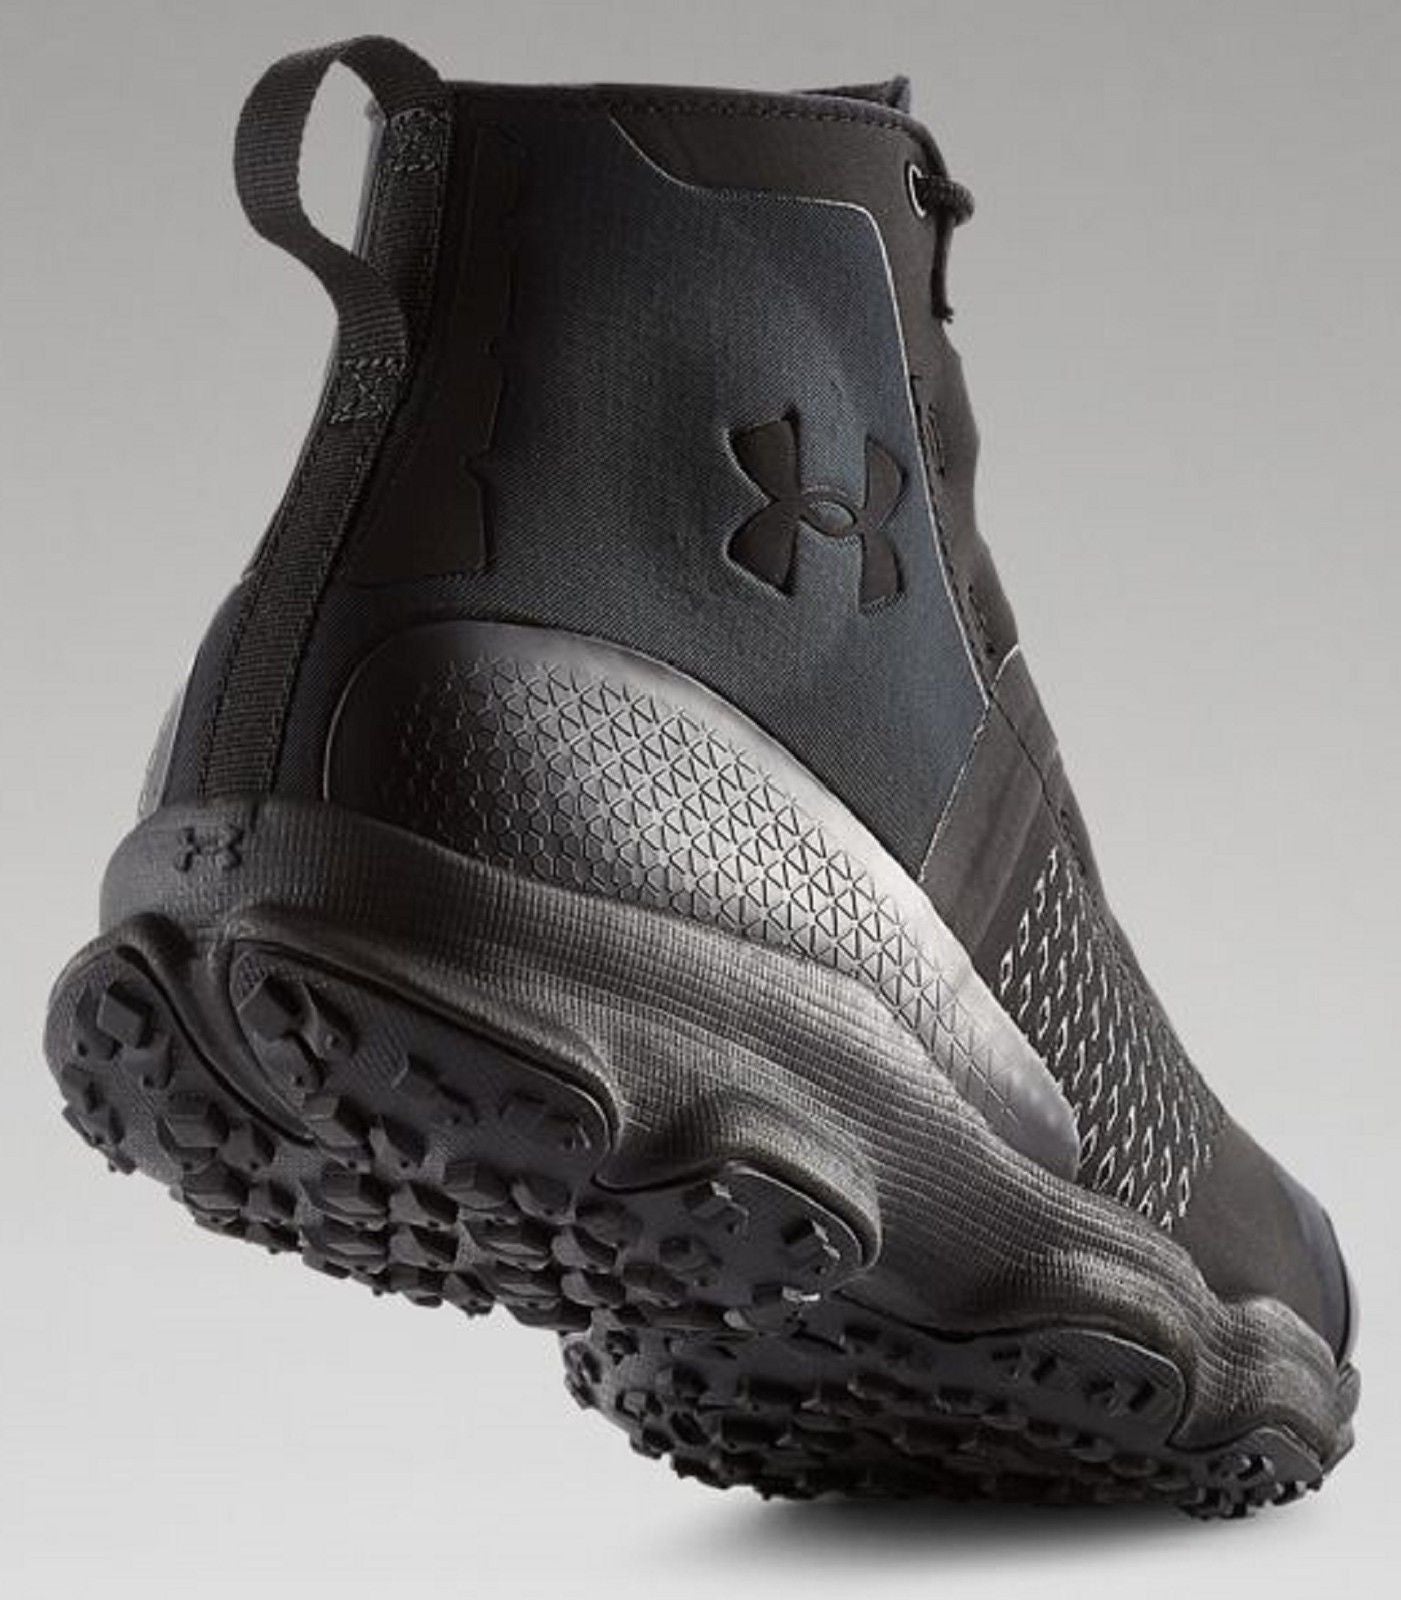 Under Armour Black SpeedFit Hike Boots - Men's UA Versatile Lightweight Mid Boot